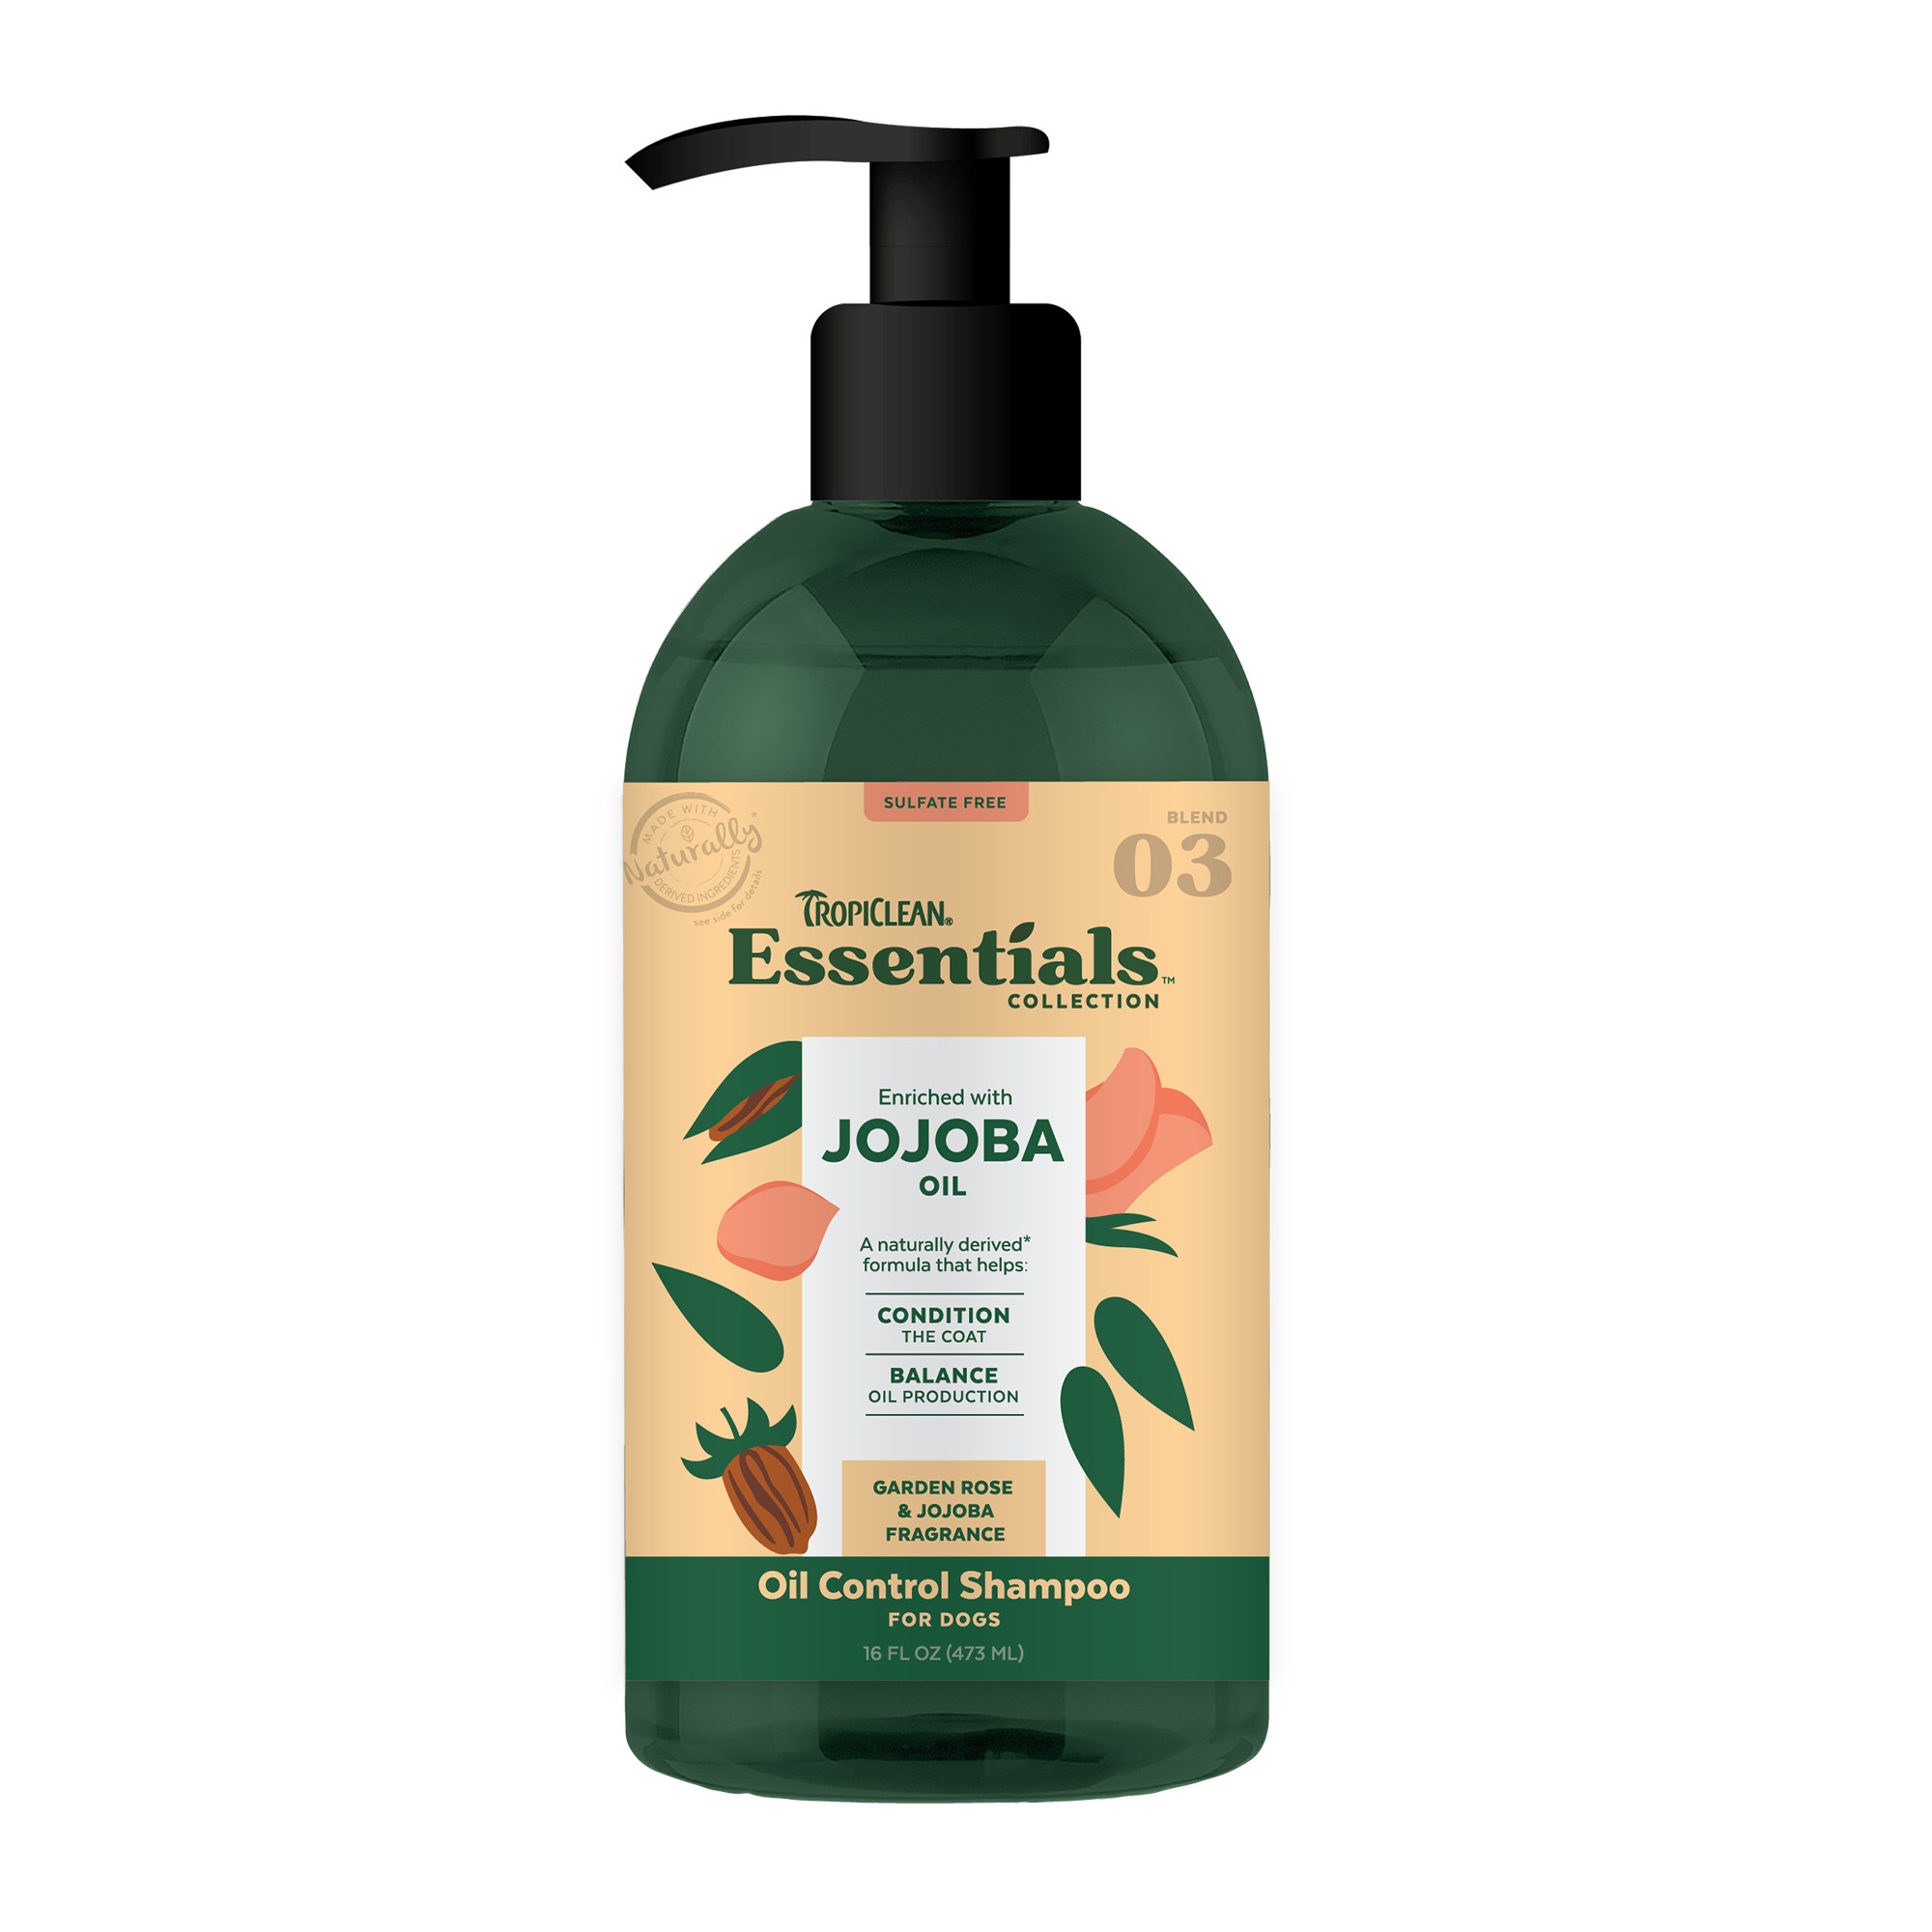 Tropiclean Essentials Oil Control Shampoo Jojoba Oil - Garden Rose & Jojoba For Dogs 473ml